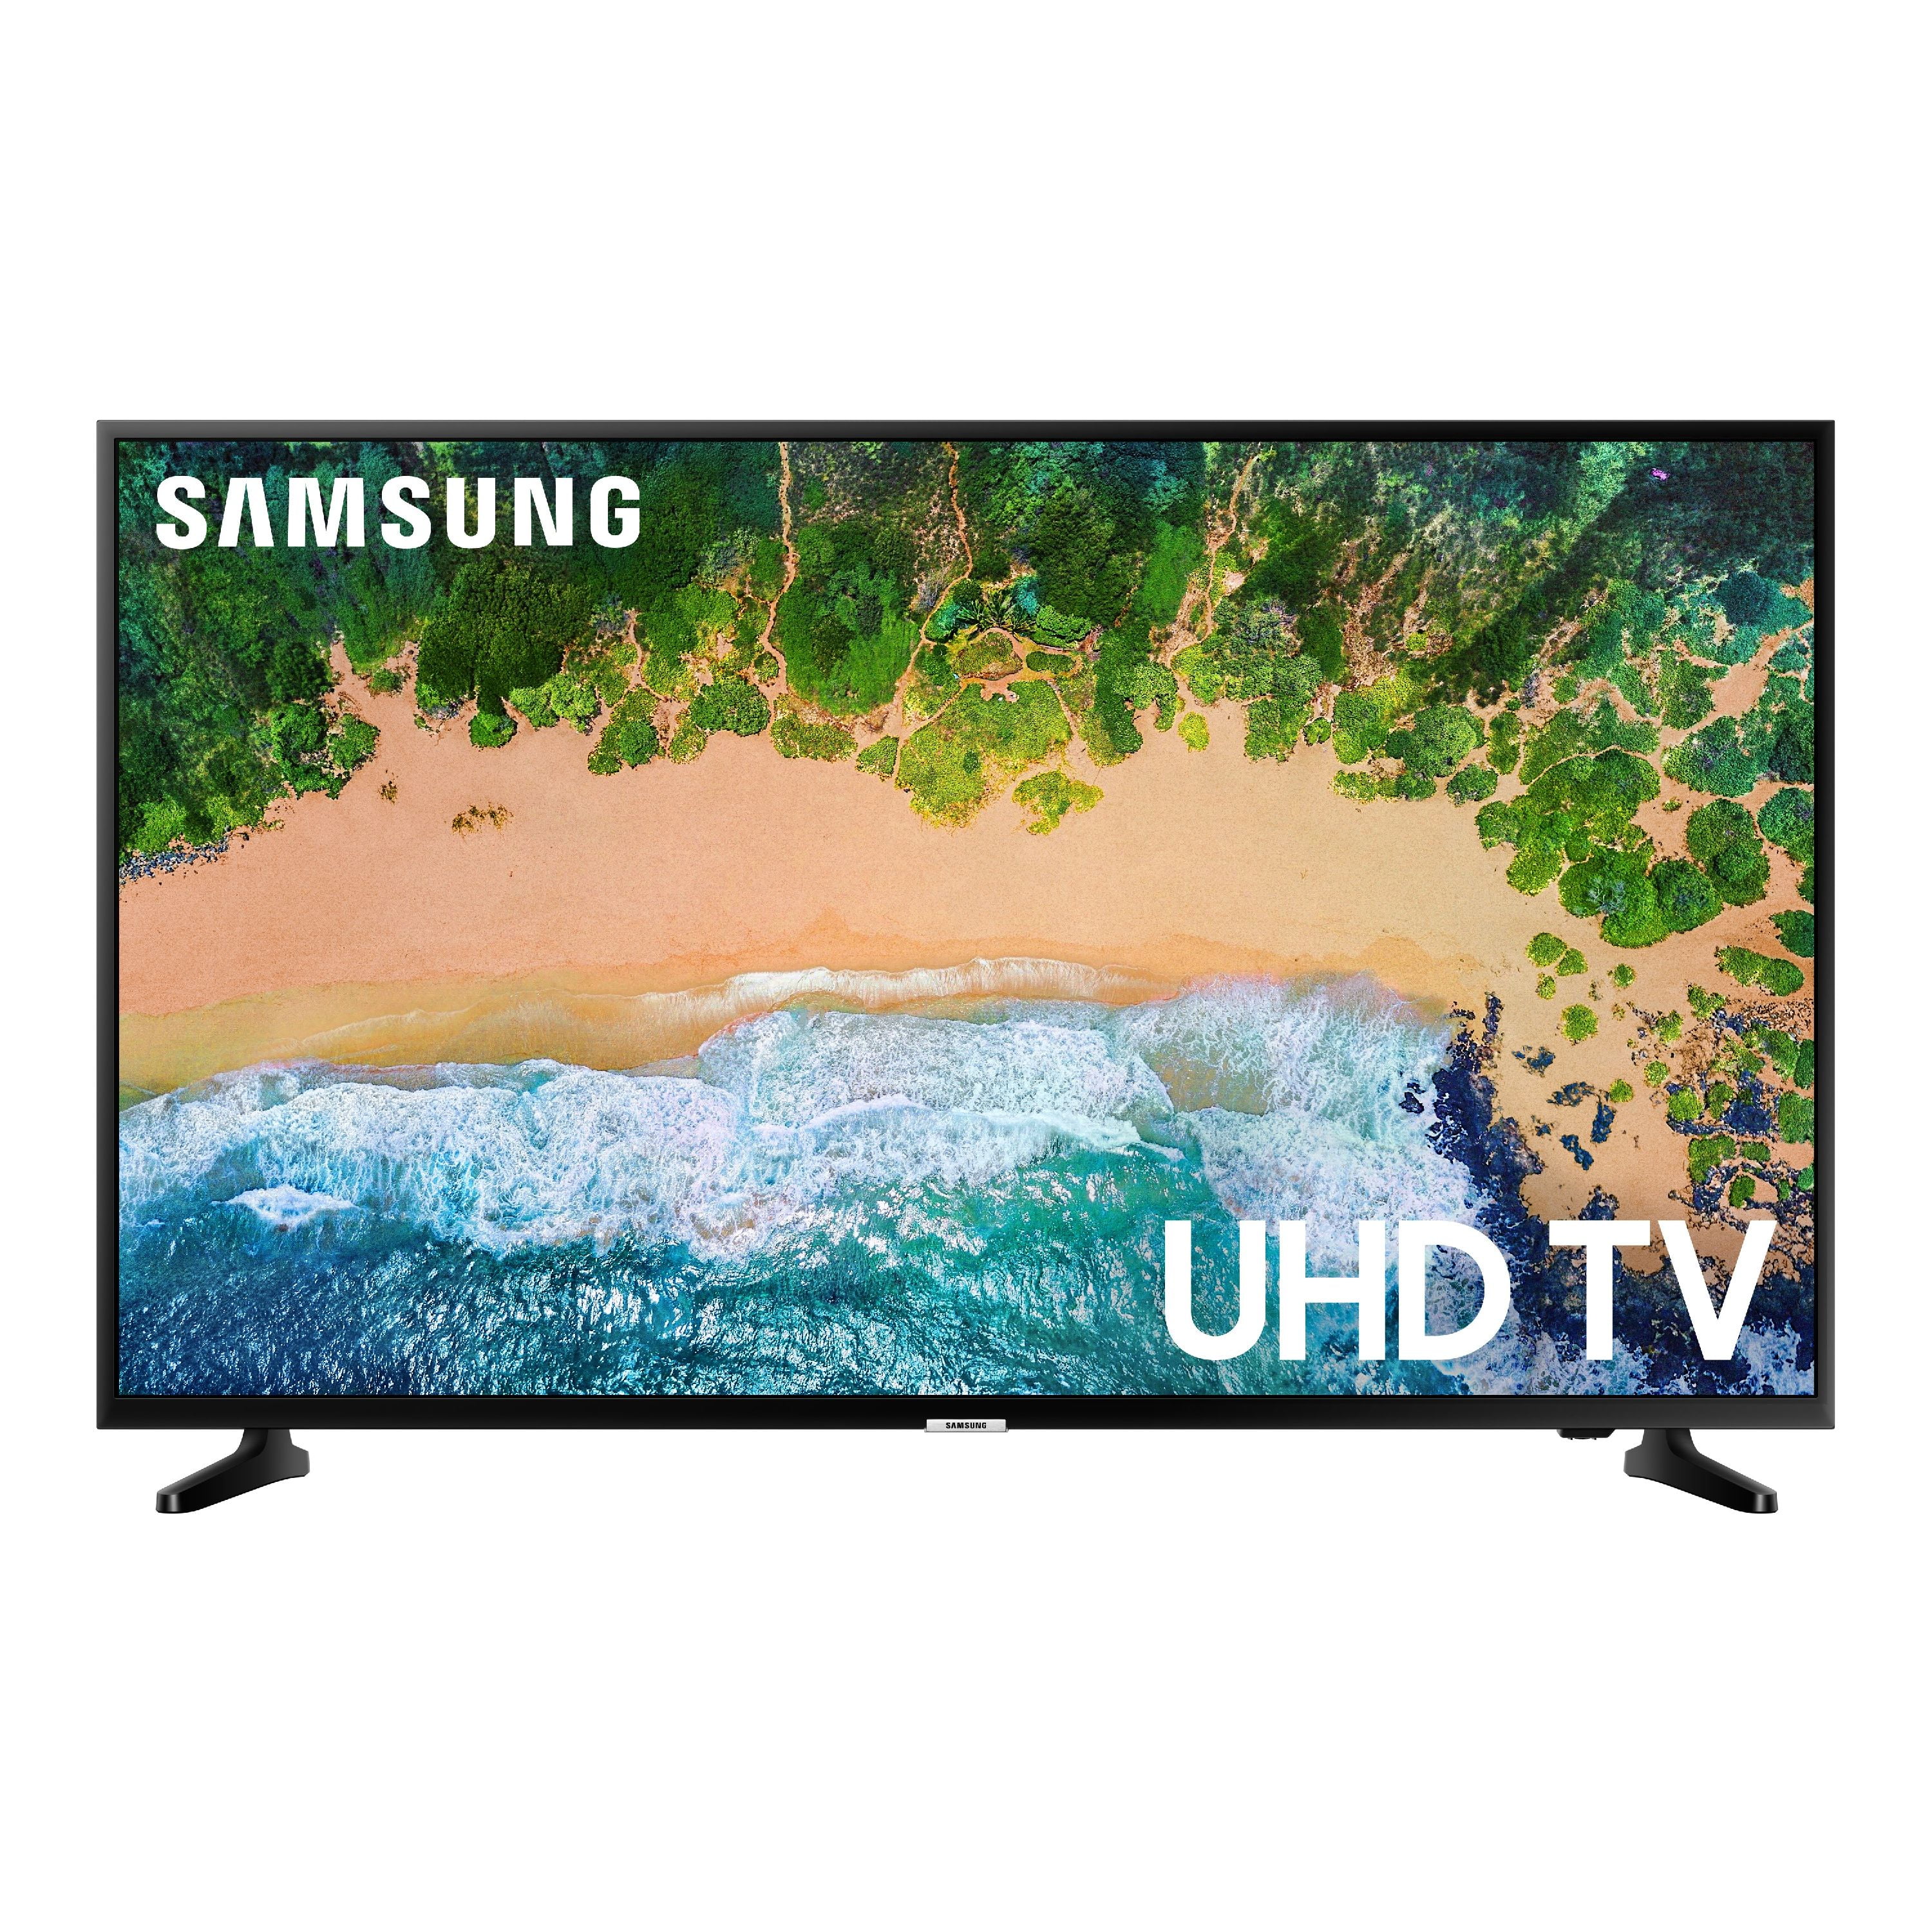 SAMSUNG 55" 4K UHD 2160p LED Smart TV with HDR UN55NU6900 - Walmart.com